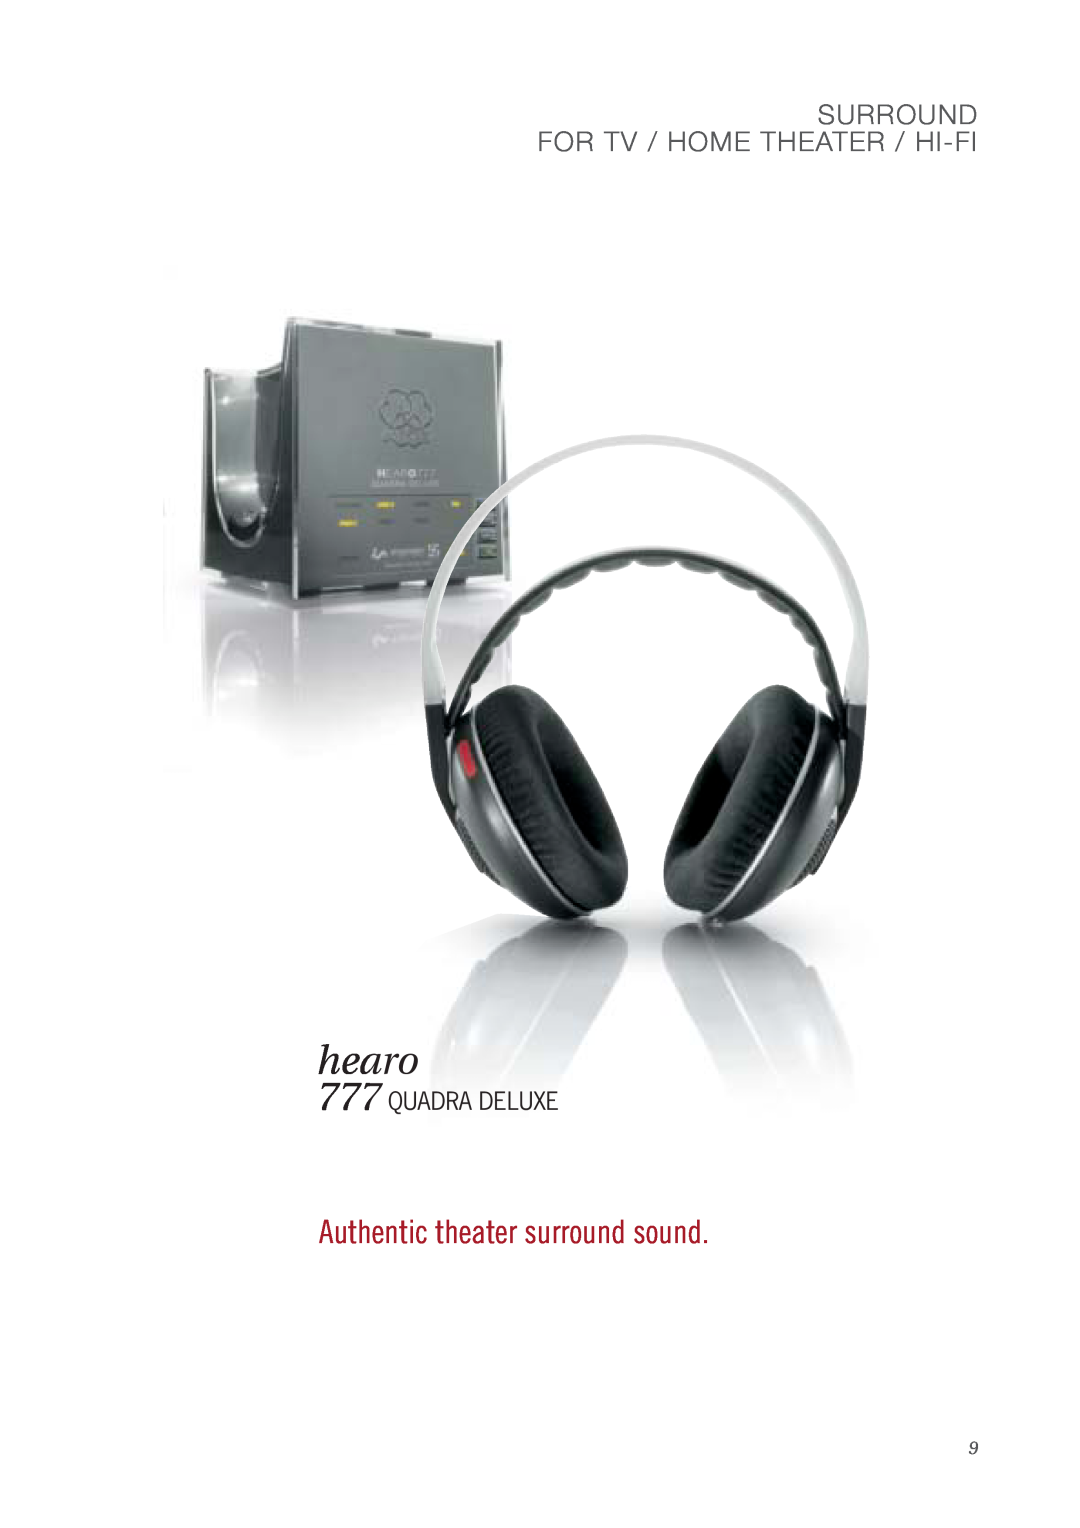 AKG Acoustics surround headphones manual hearo, Authentic theater surround sound, Surround For Tv / Home Theater / Hi-Fi 